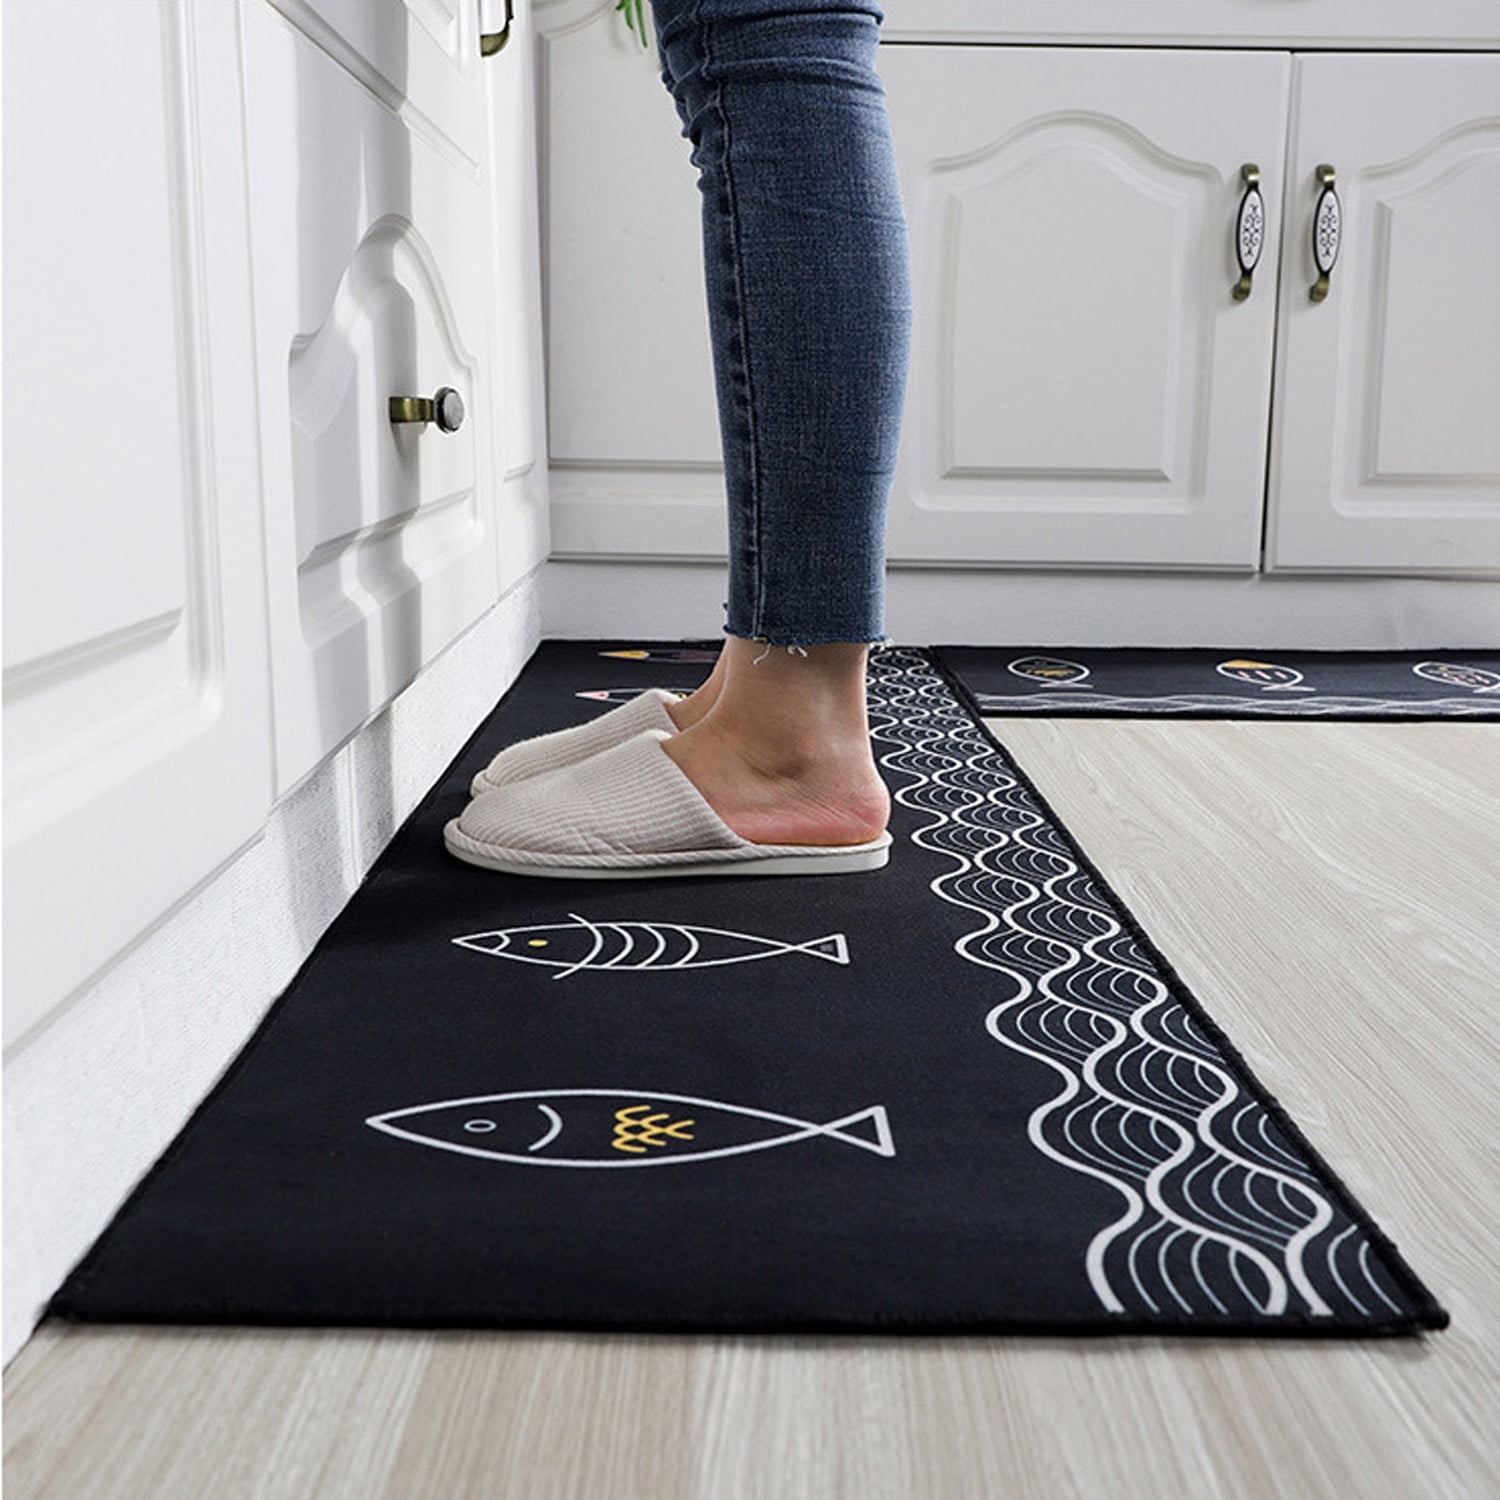 2-Piece Kitchen Mat Set Doormat Runner Rug Anti-Slip Carpet Floor Pad Non Slip 